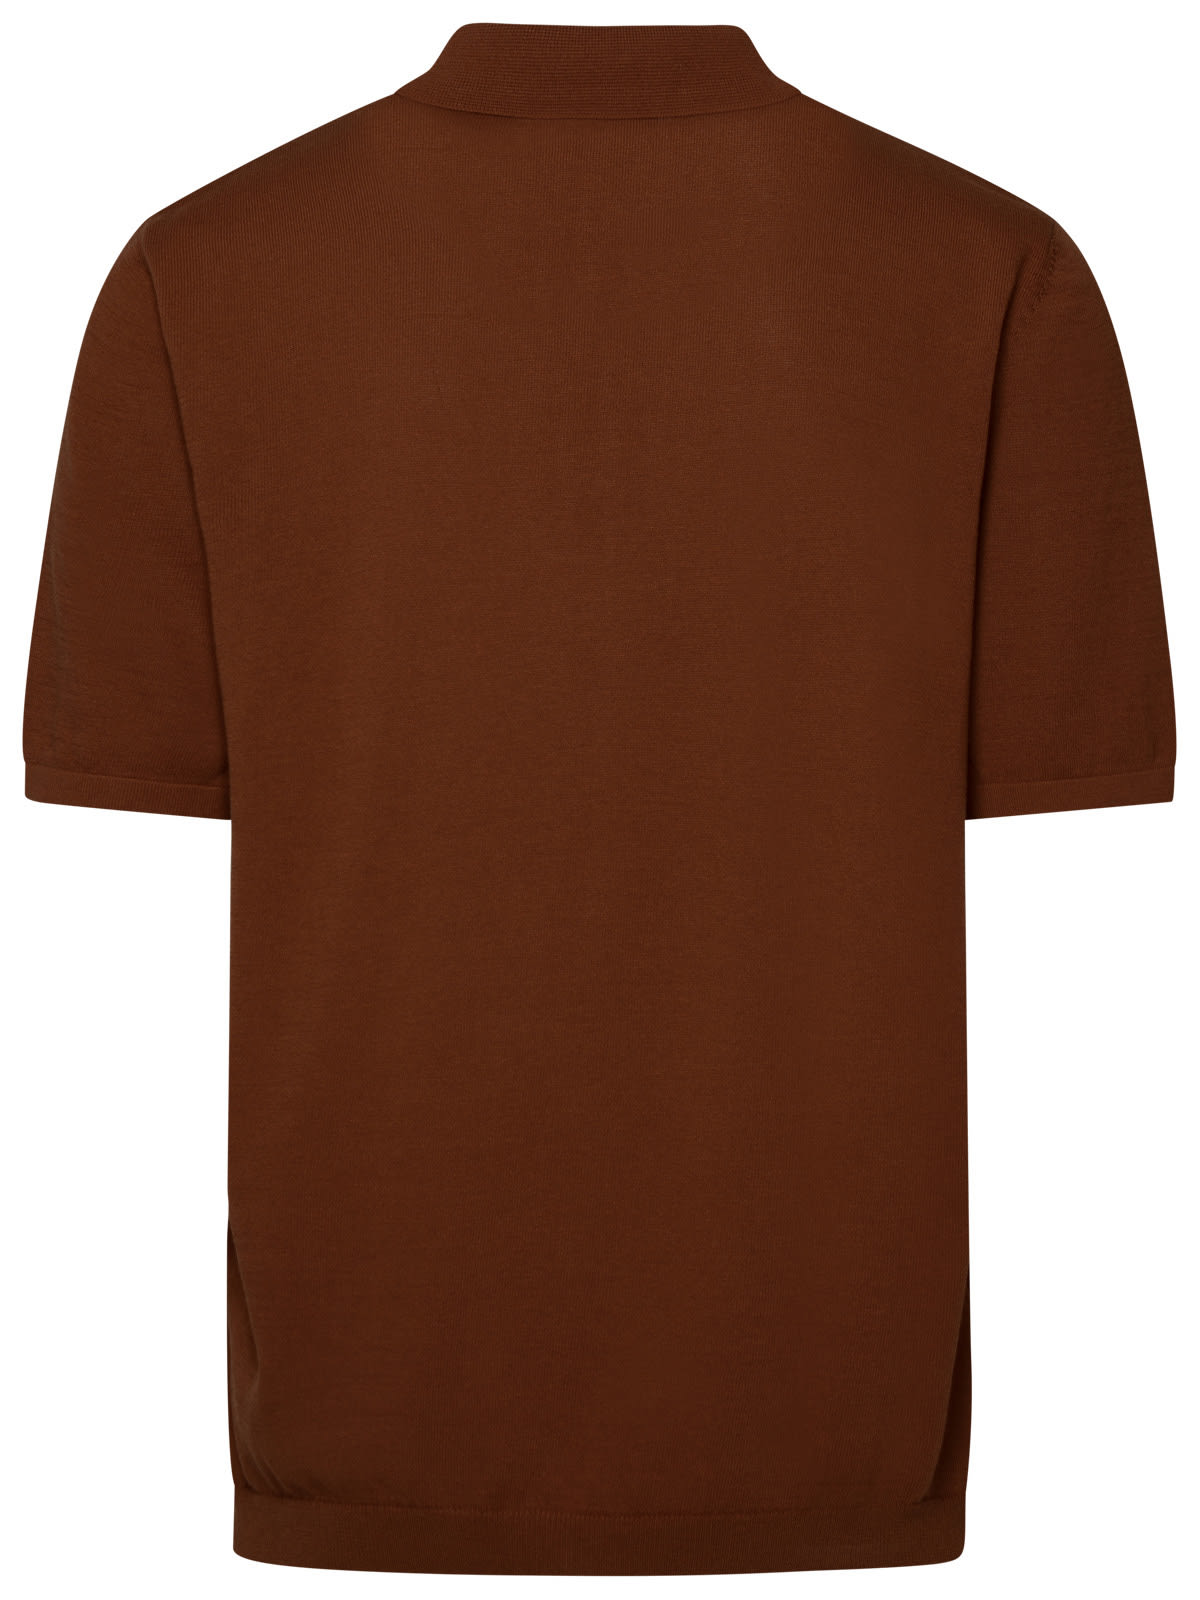 Shop Apc Brown Cotton Jacky Polo Shirt